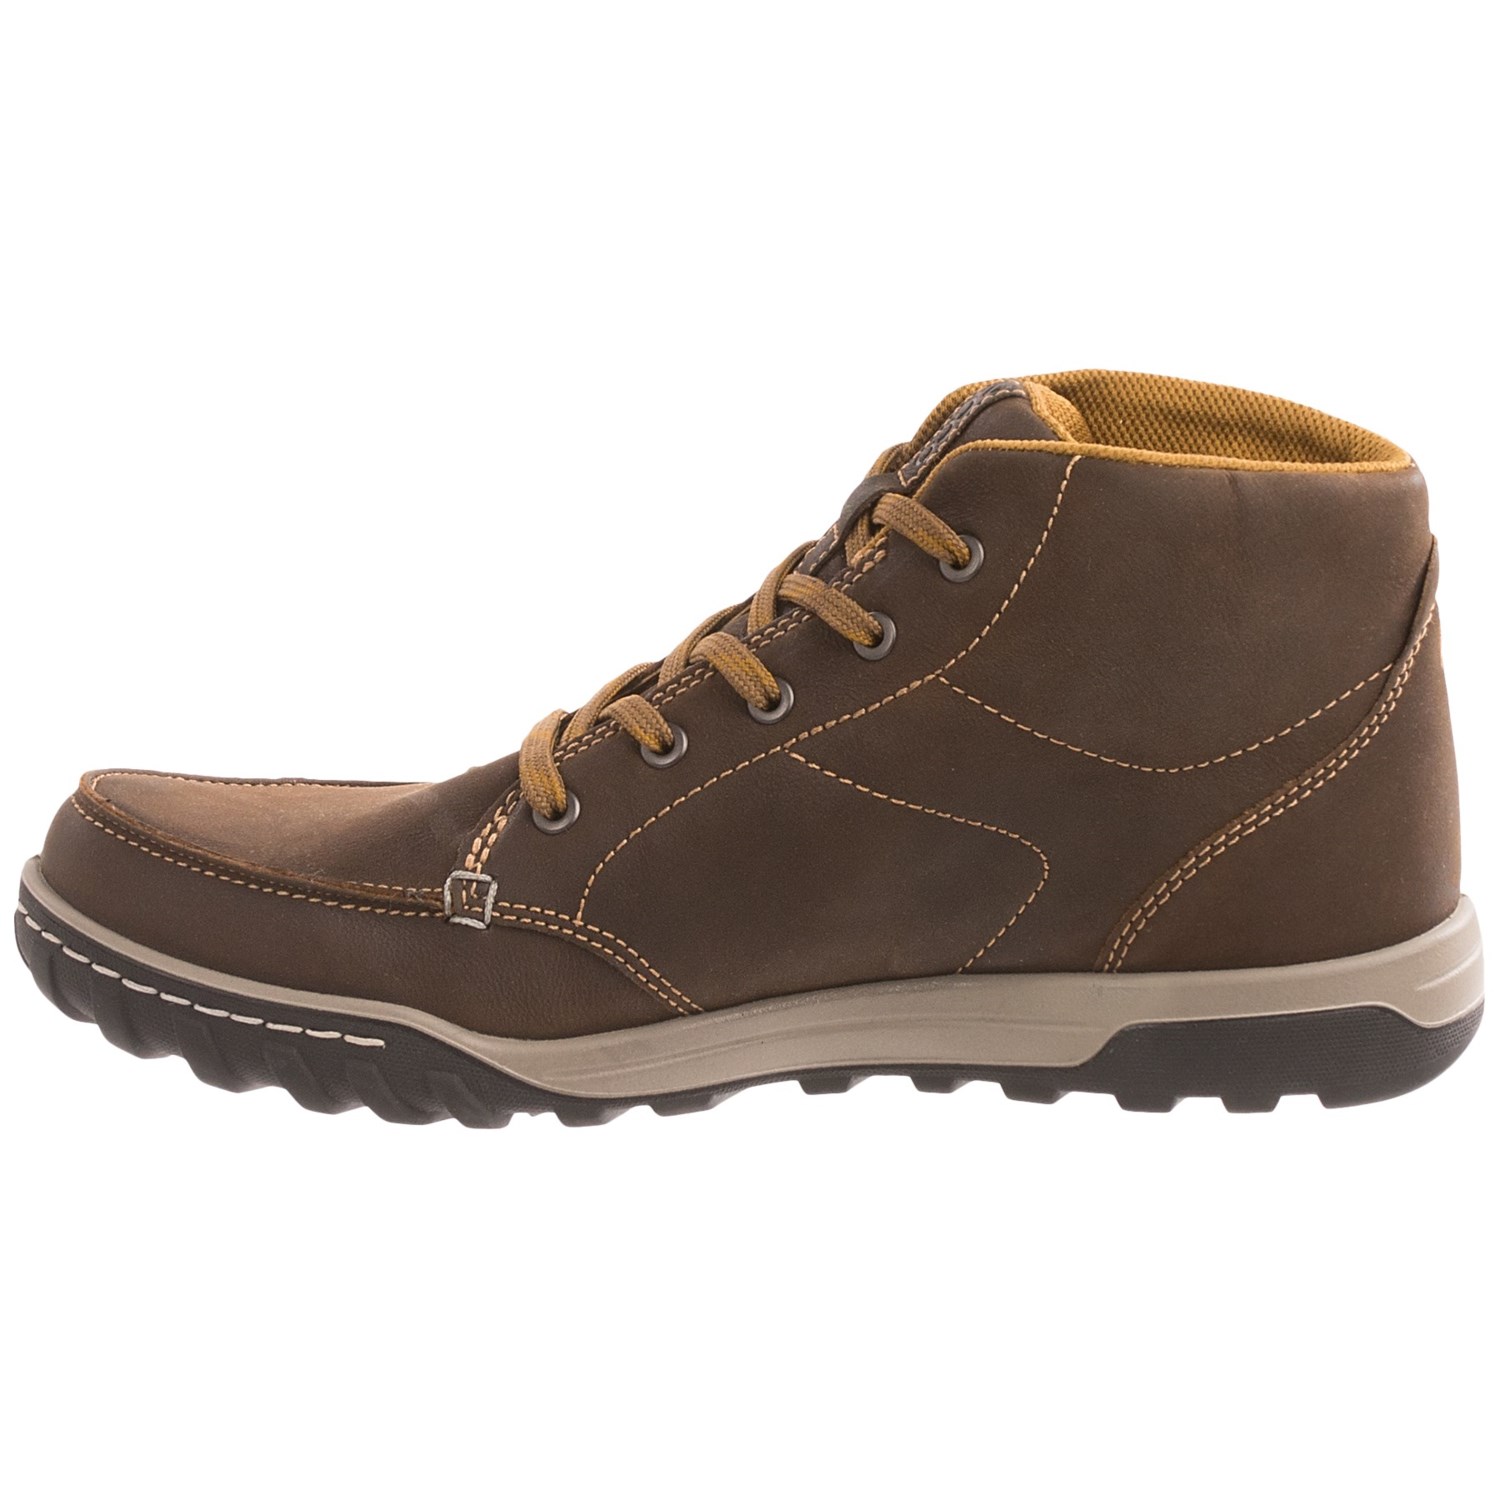 ECCO Brooklyn Boots (For Men) 8606J - Save 18%